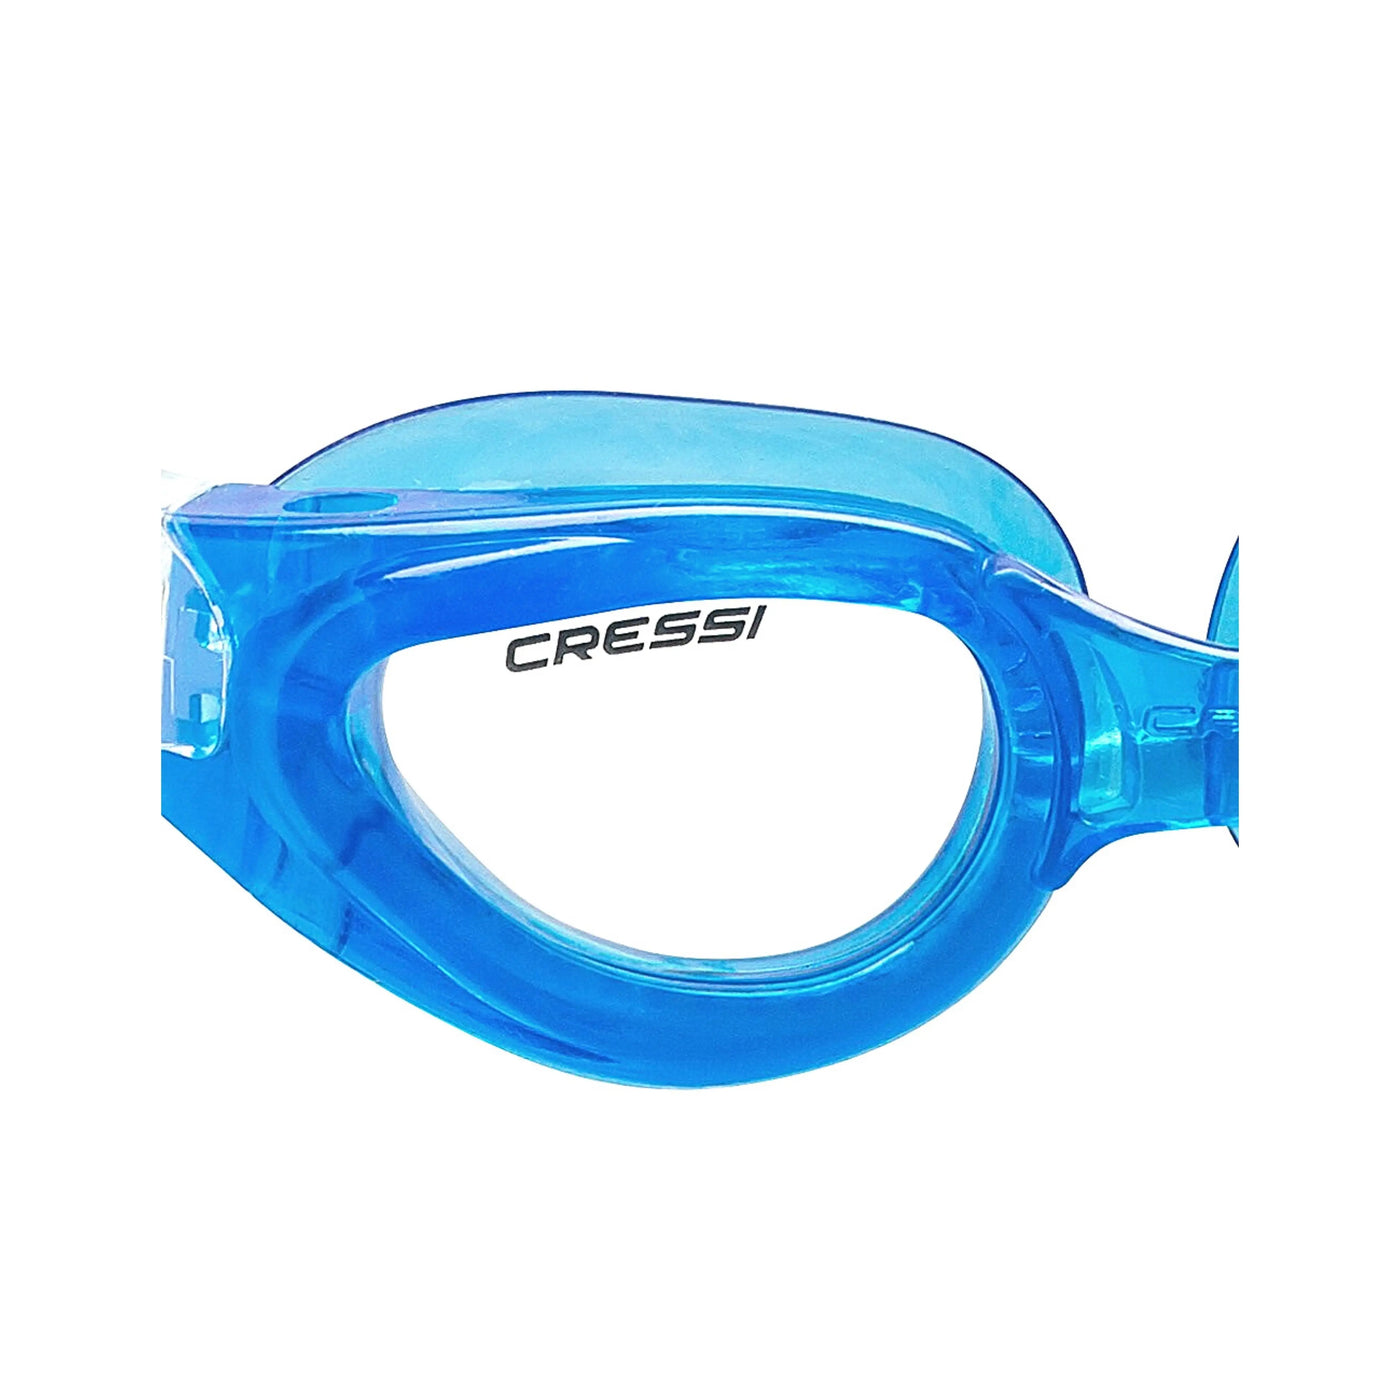 ROCKS | Cressi Swim Goggles 7/15 Years Old Cressi